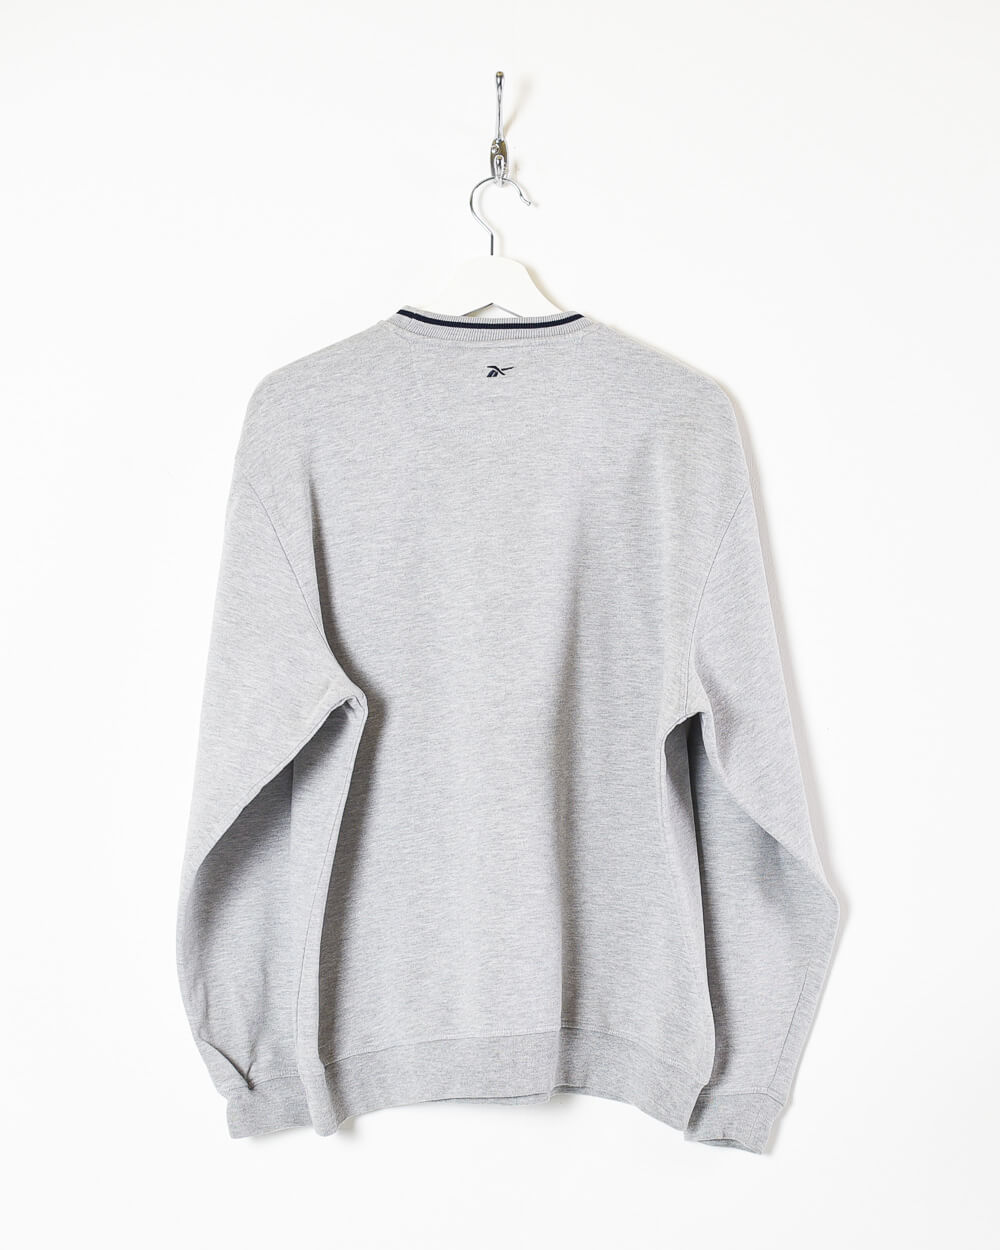 Stone Reebok Sweatshirt - Medium